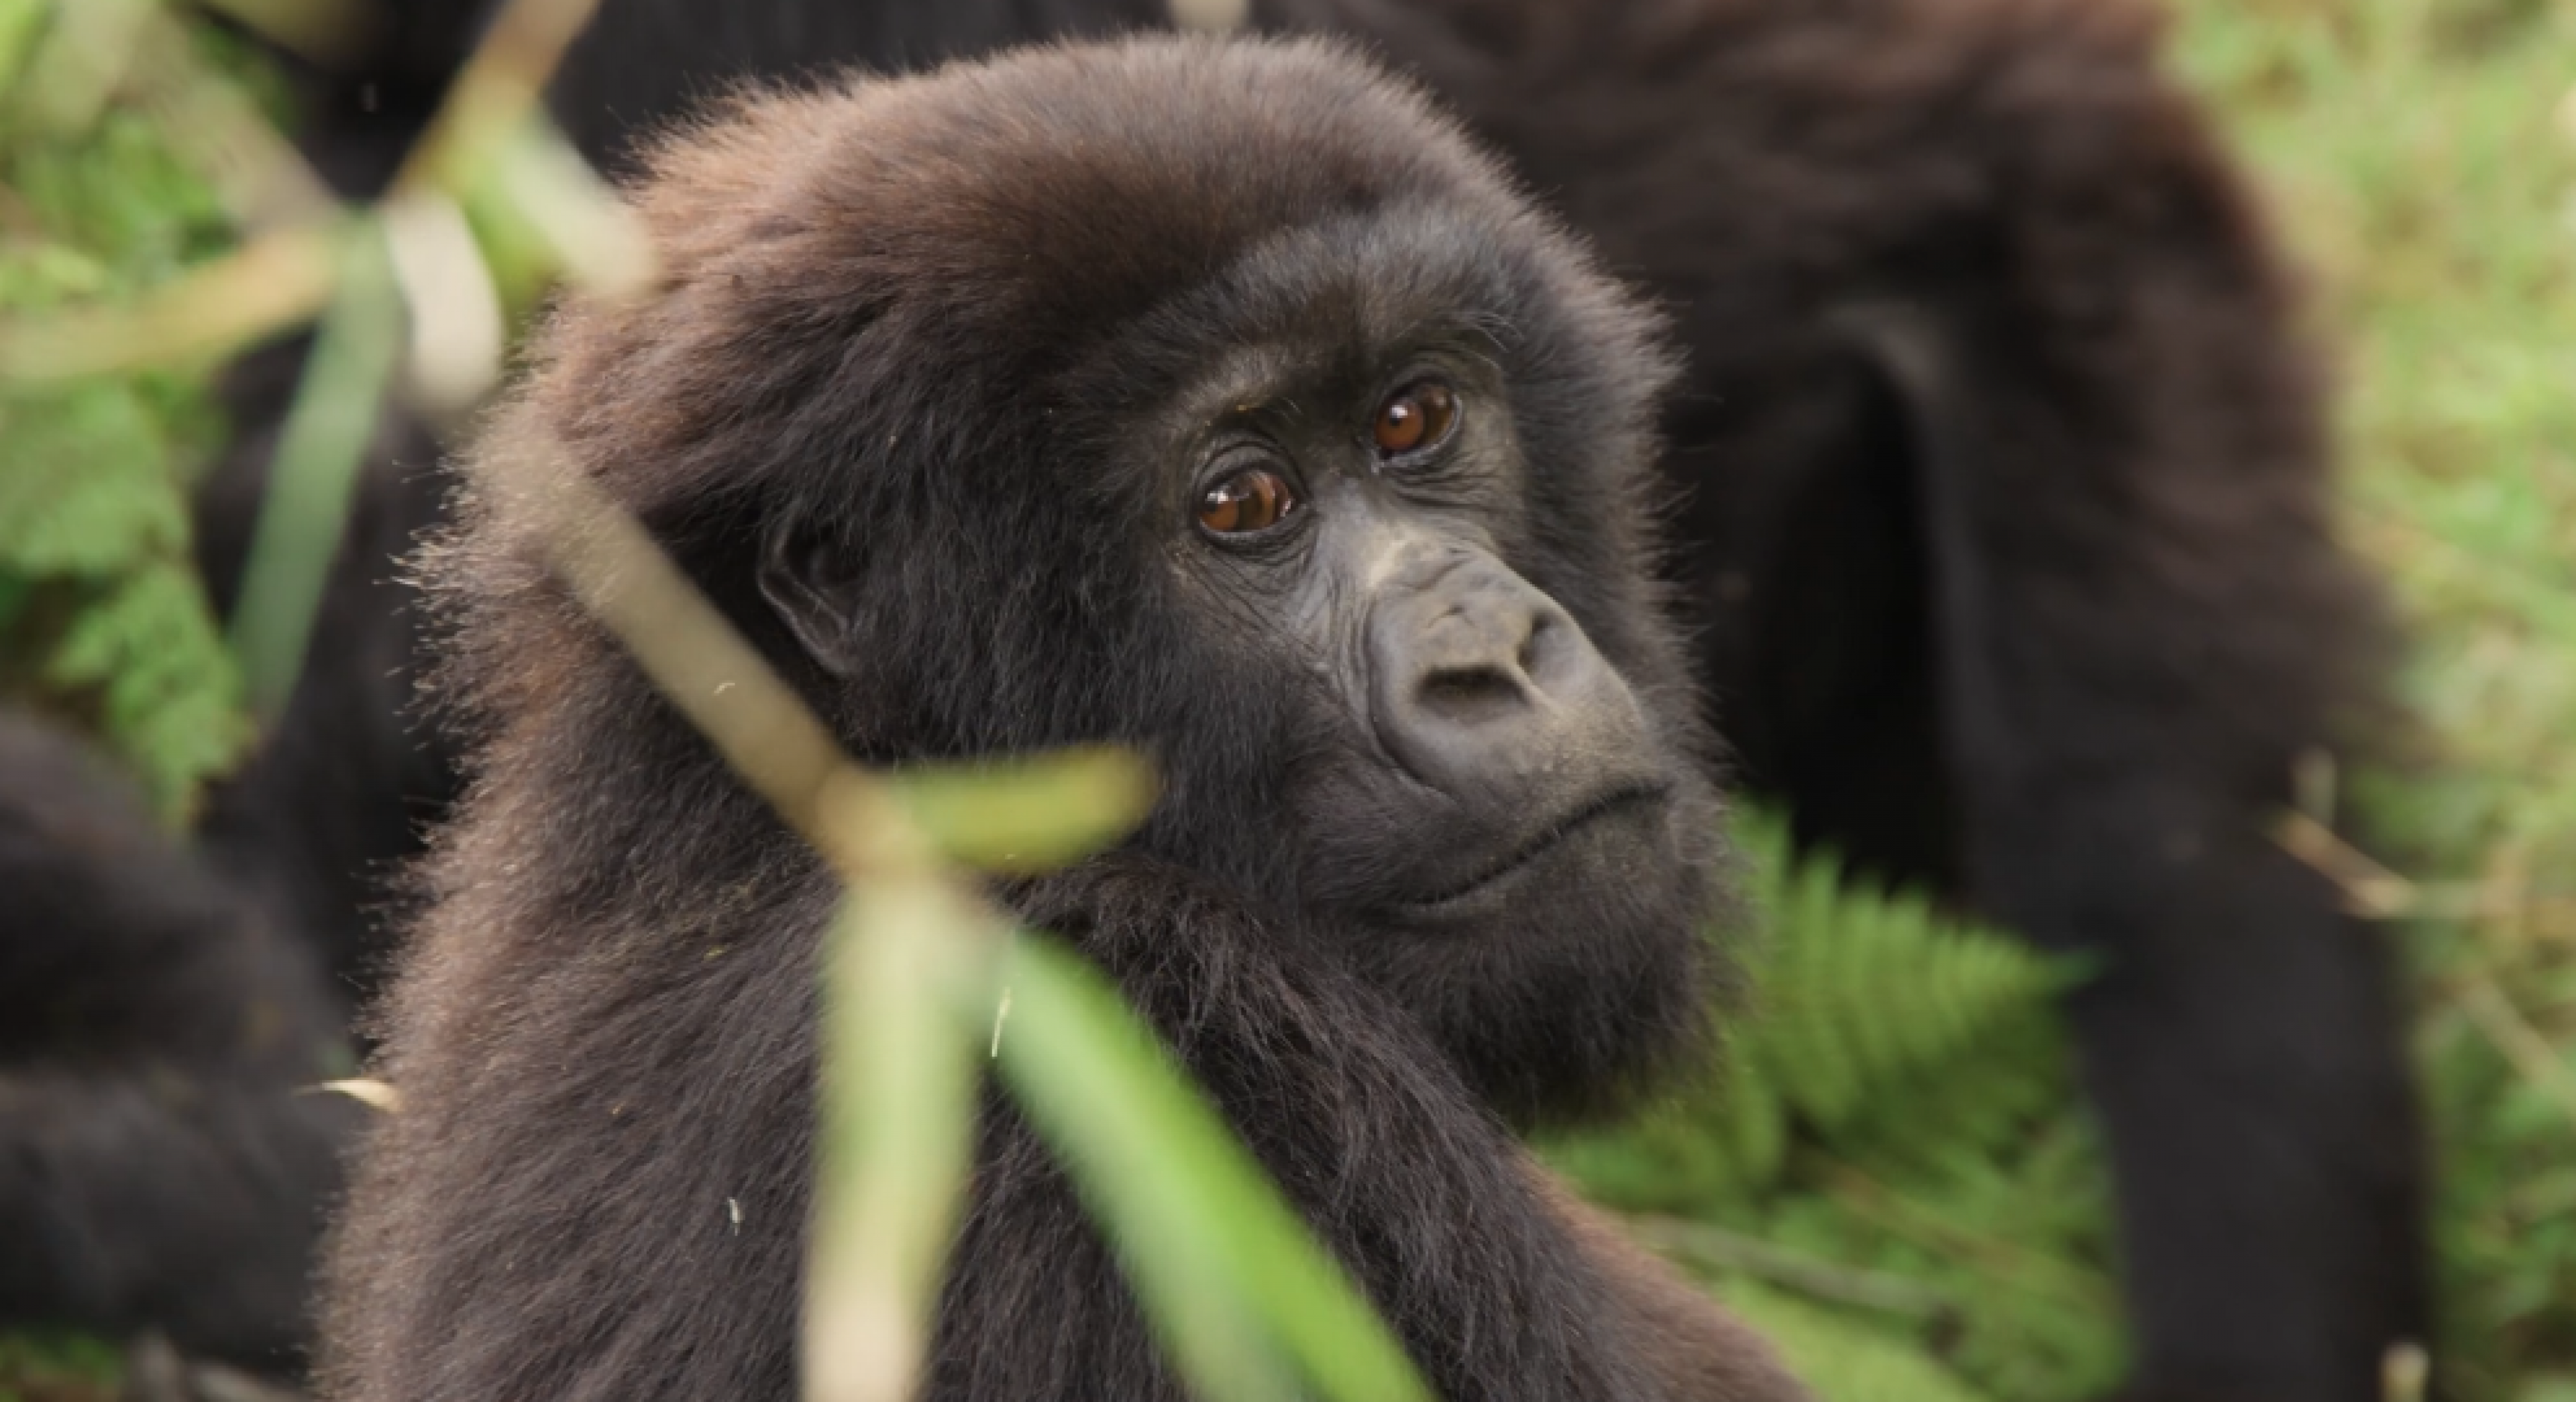 Face of young Mountain Gorilla in Rwanda